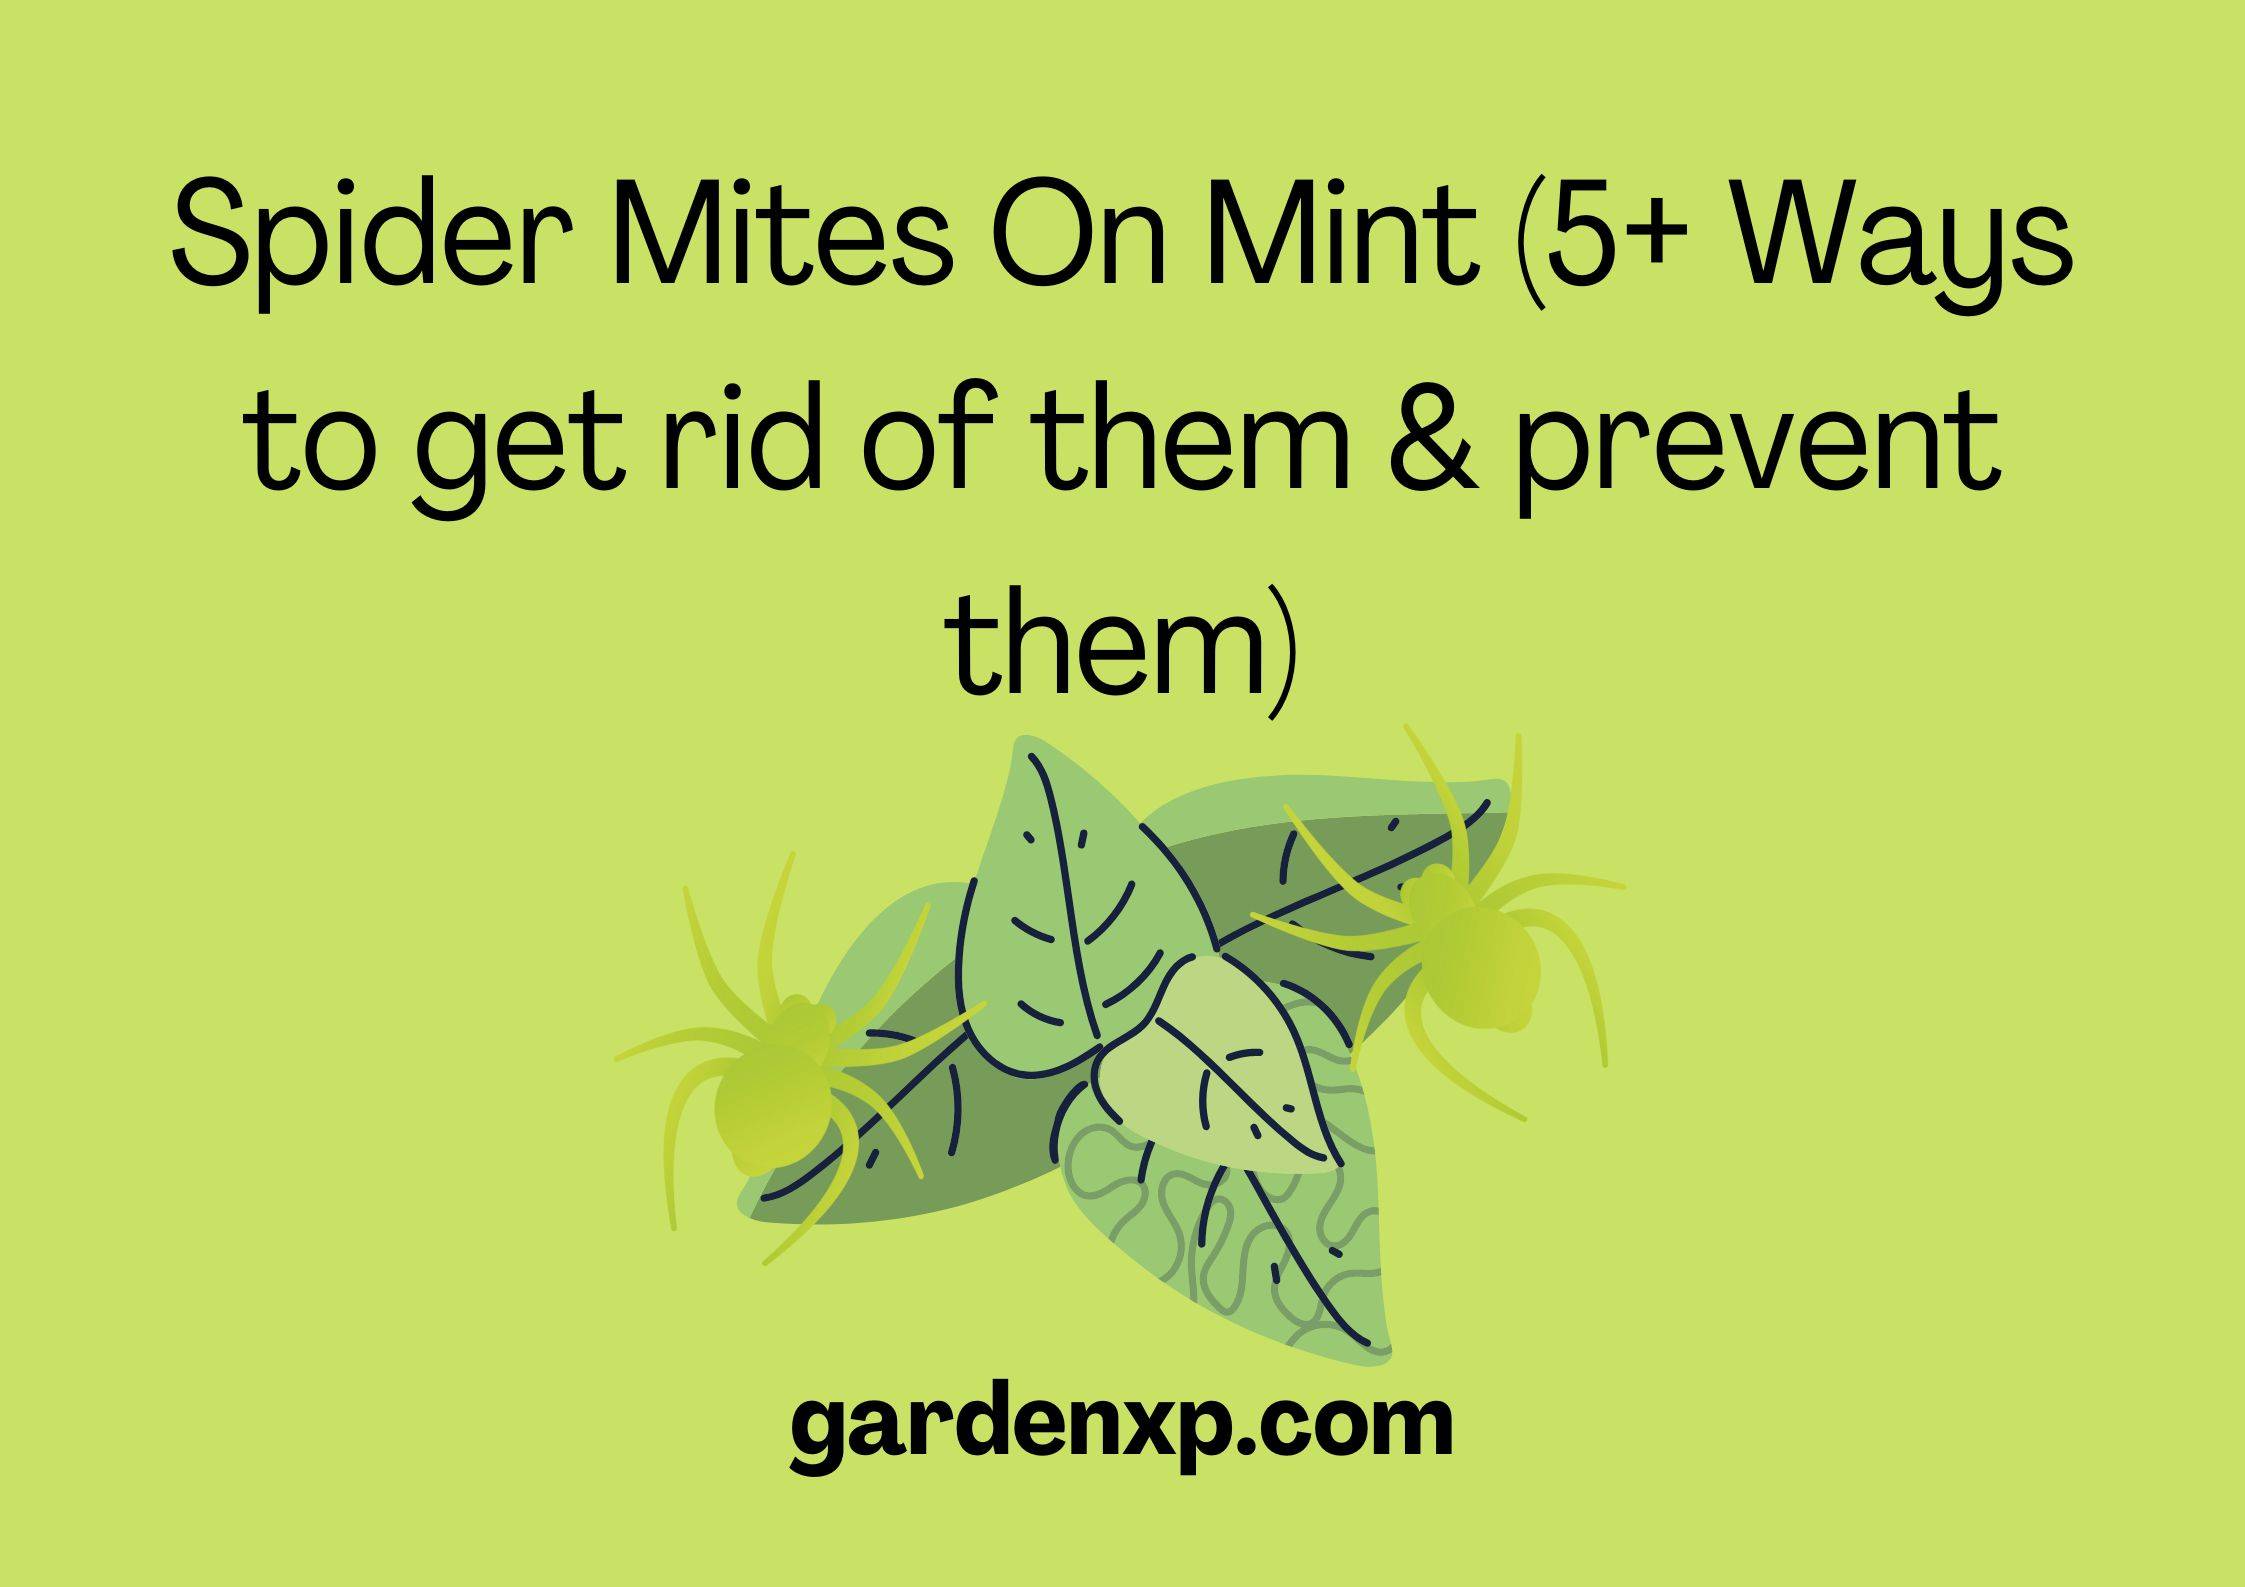 Spider Mites on Mint (5+ Ways to get rid of them & prevent them)